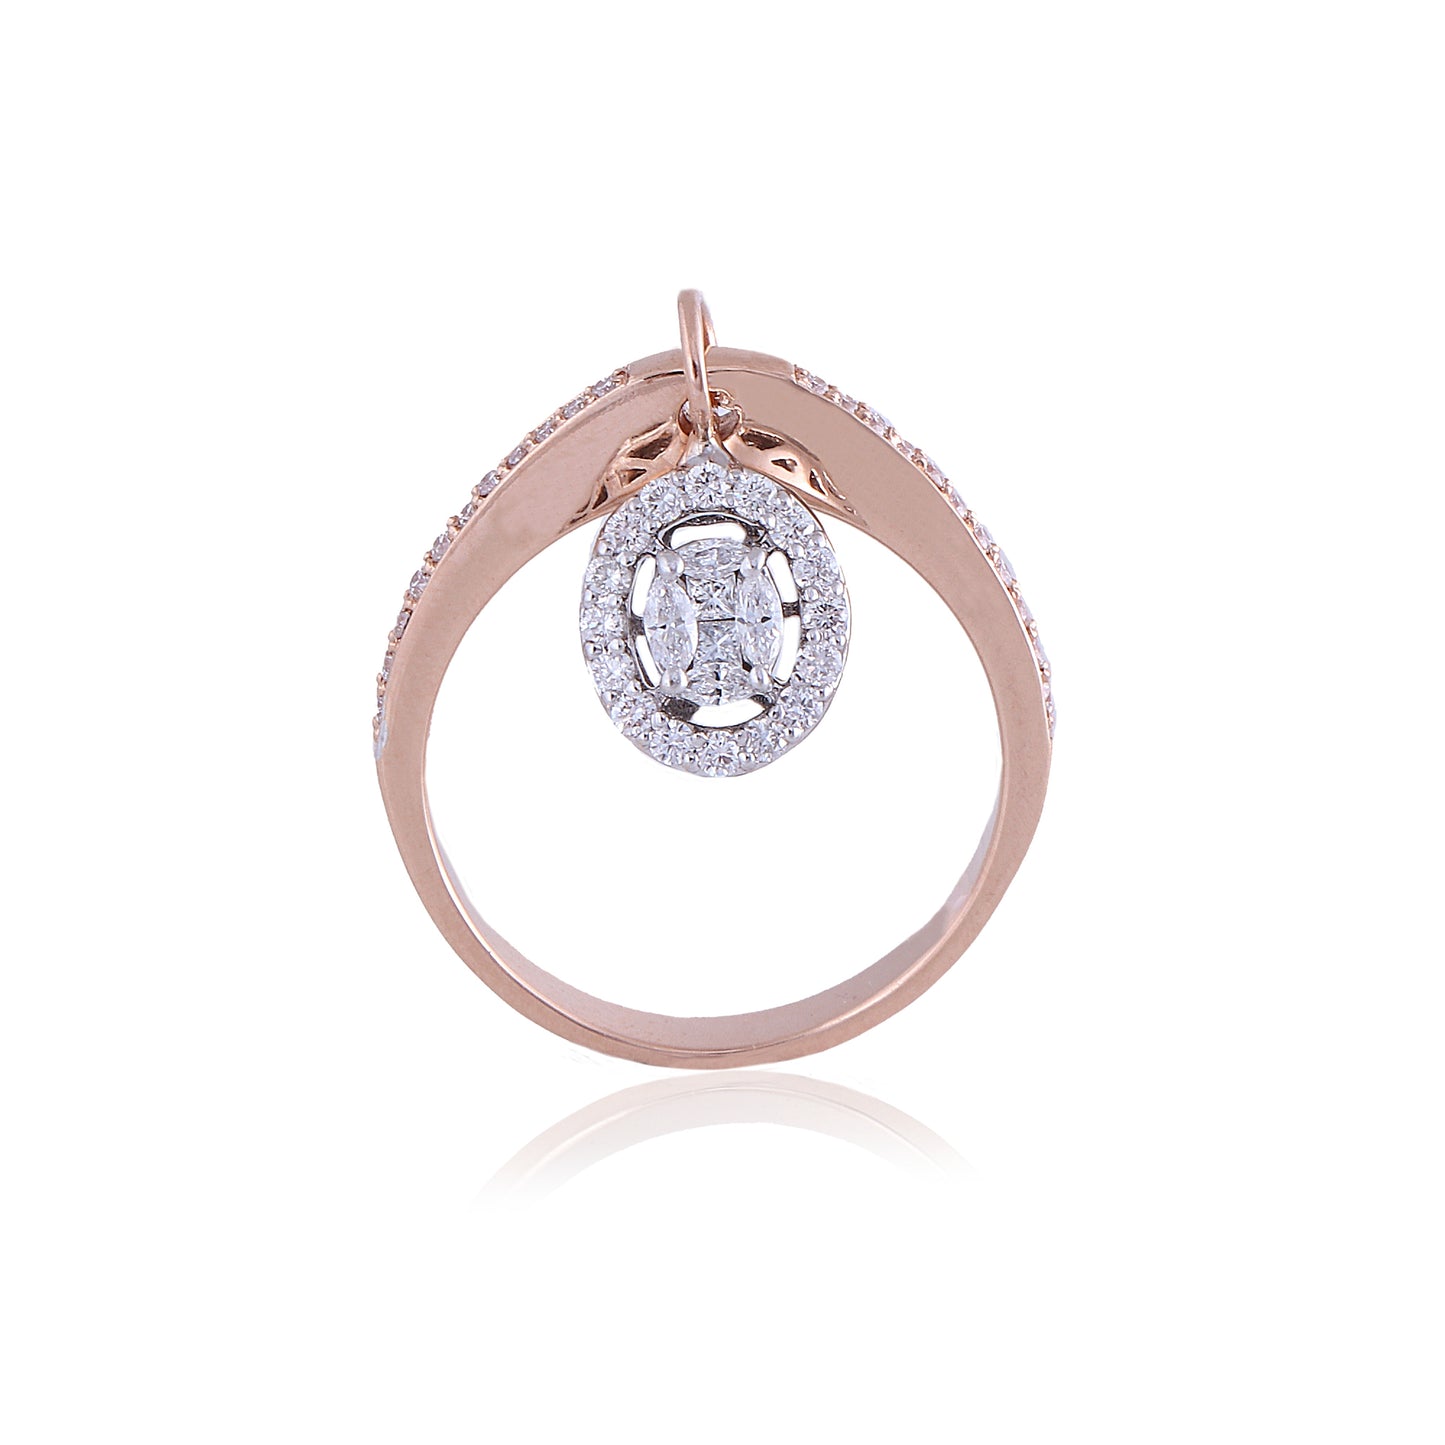 Dangling Oval Diamond Ring